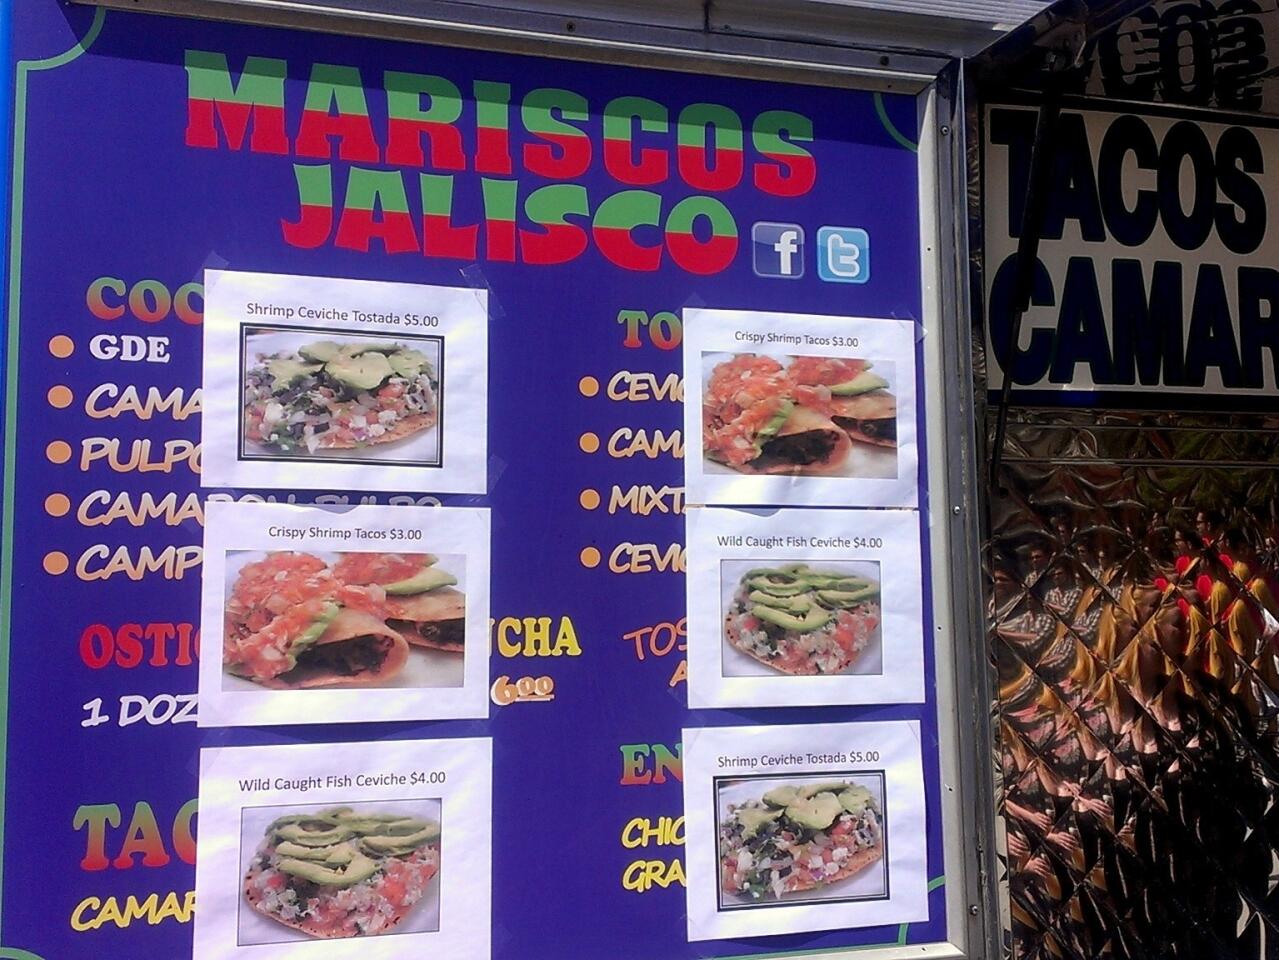 Mariscos Jalisco